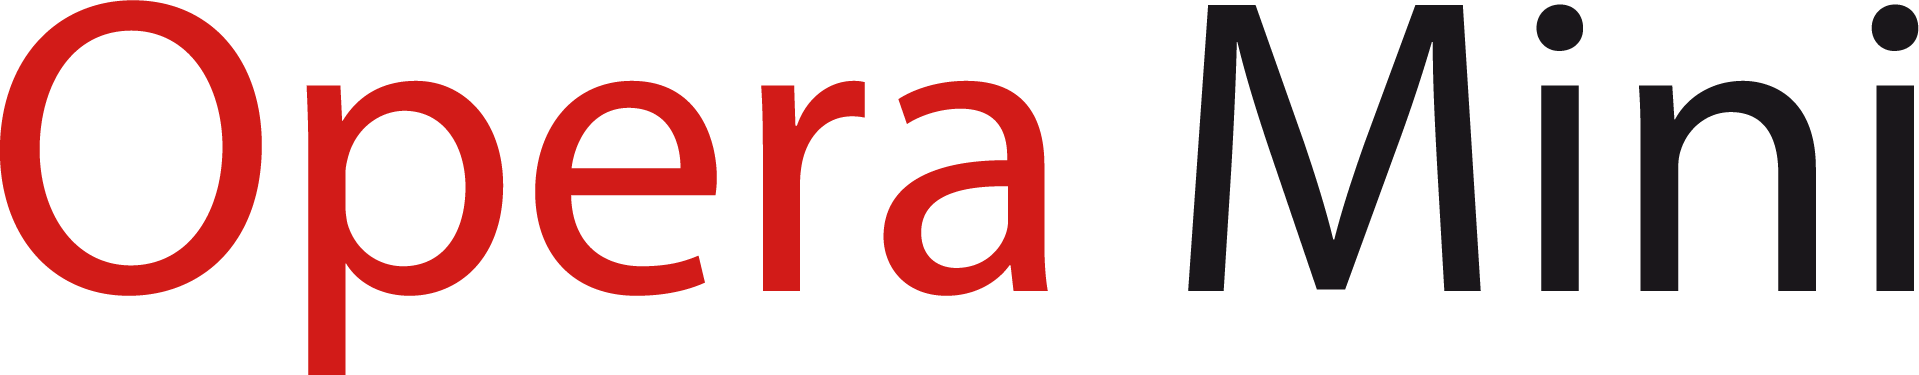 Opera All Logo - Opera Mini logo.png